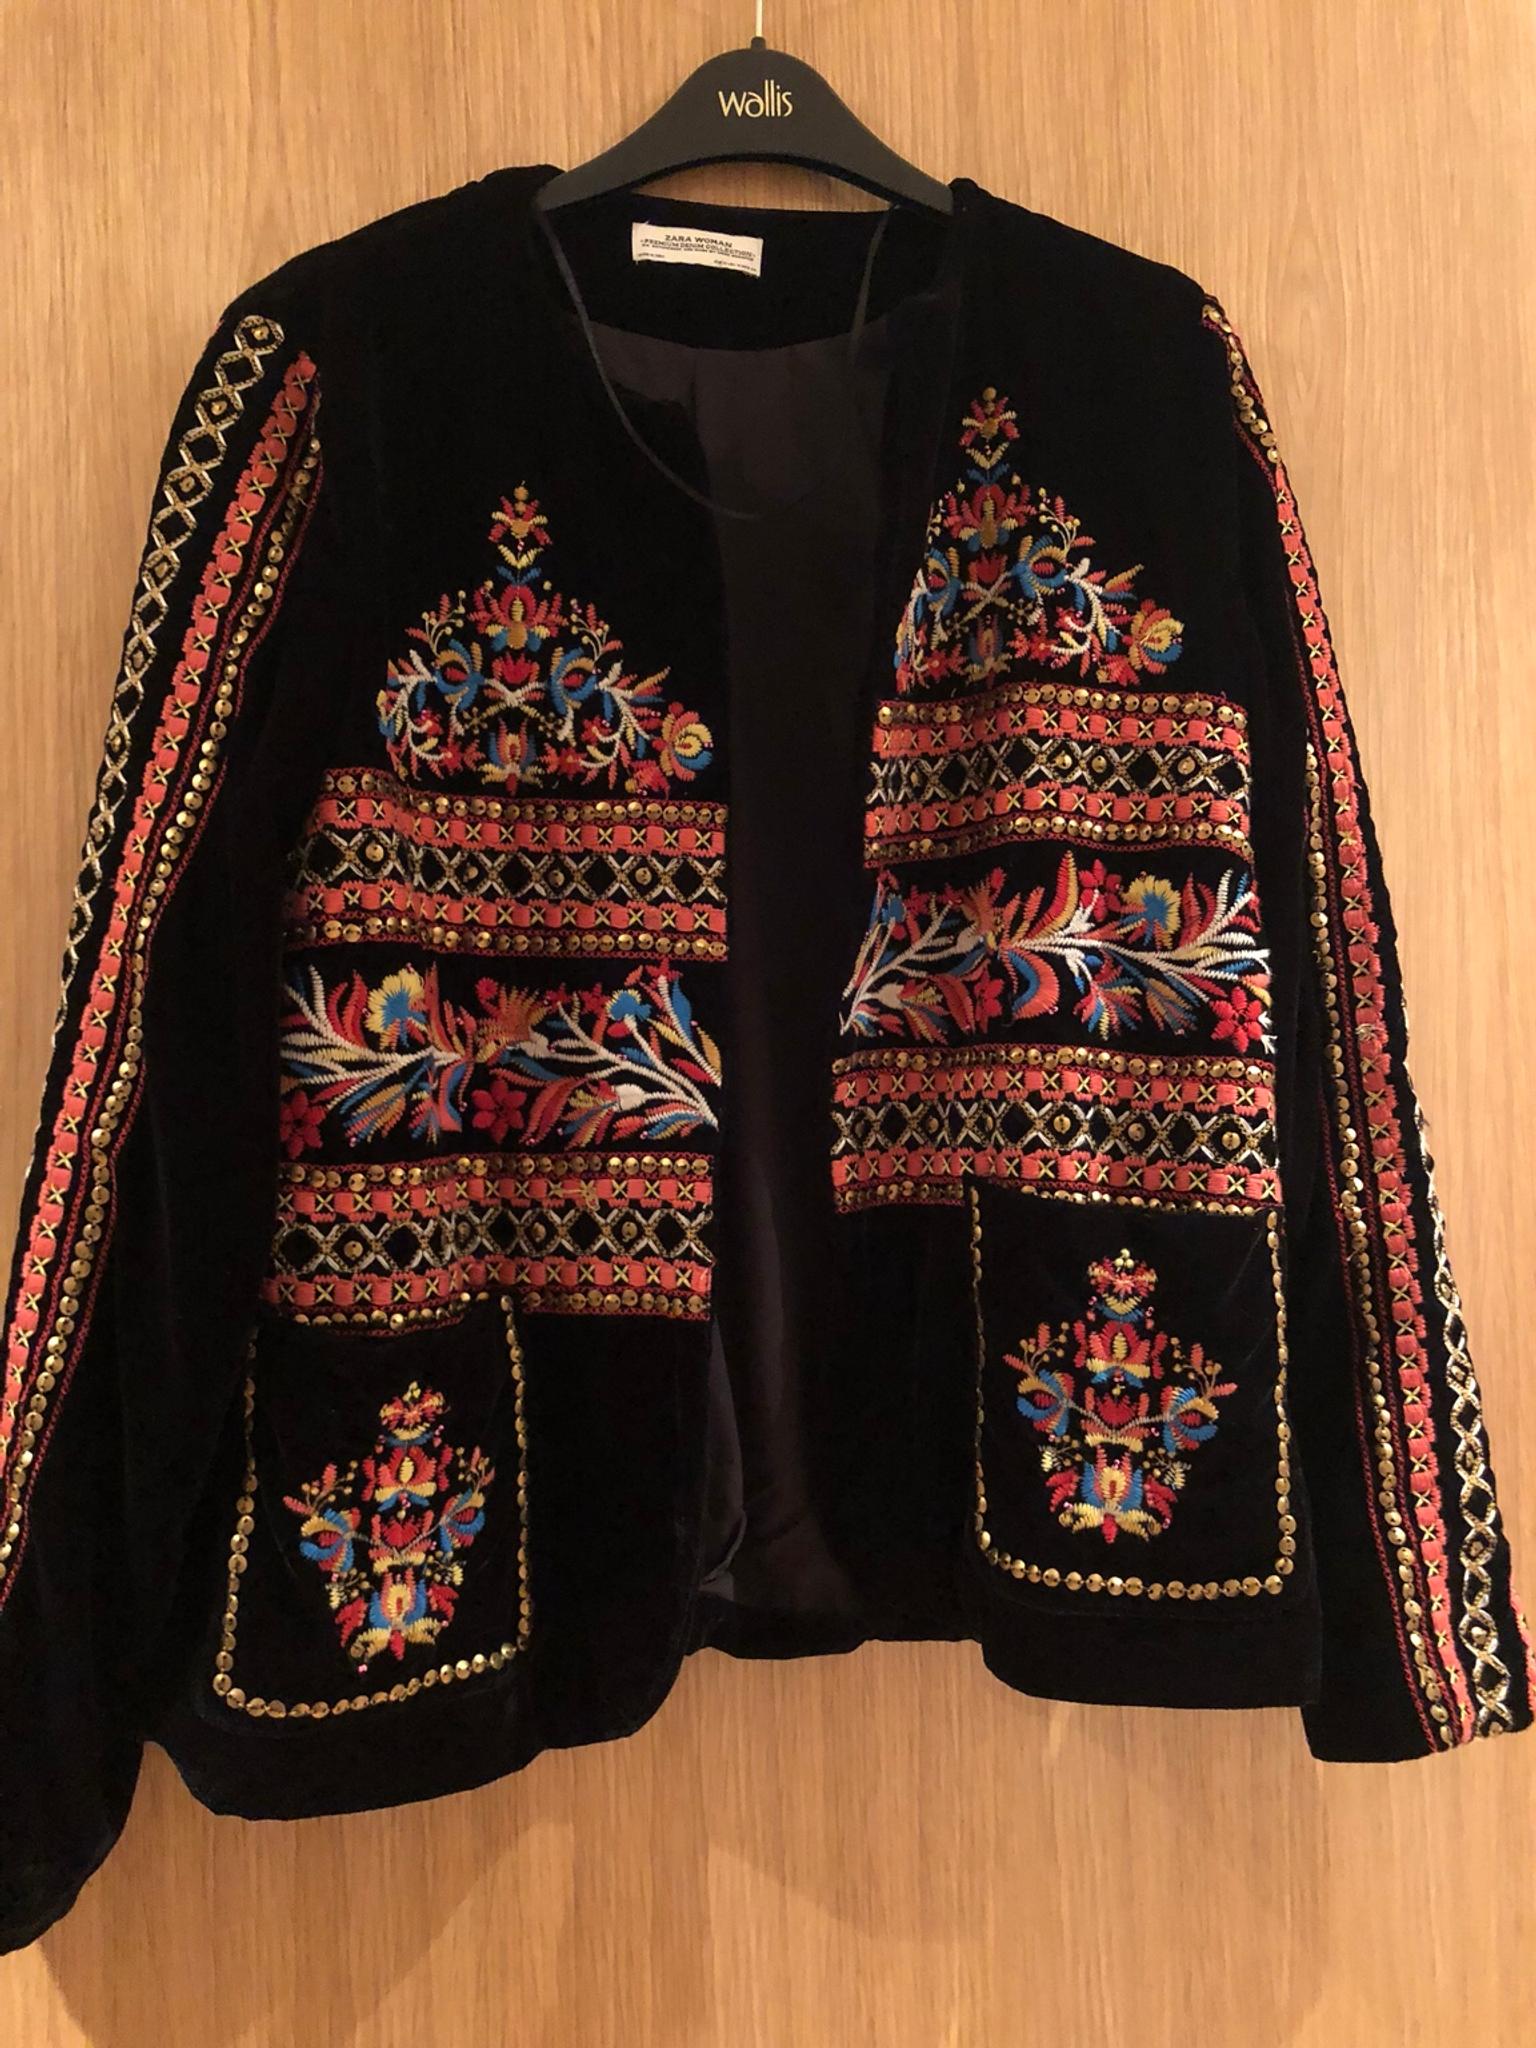 zara black embroidered jacket